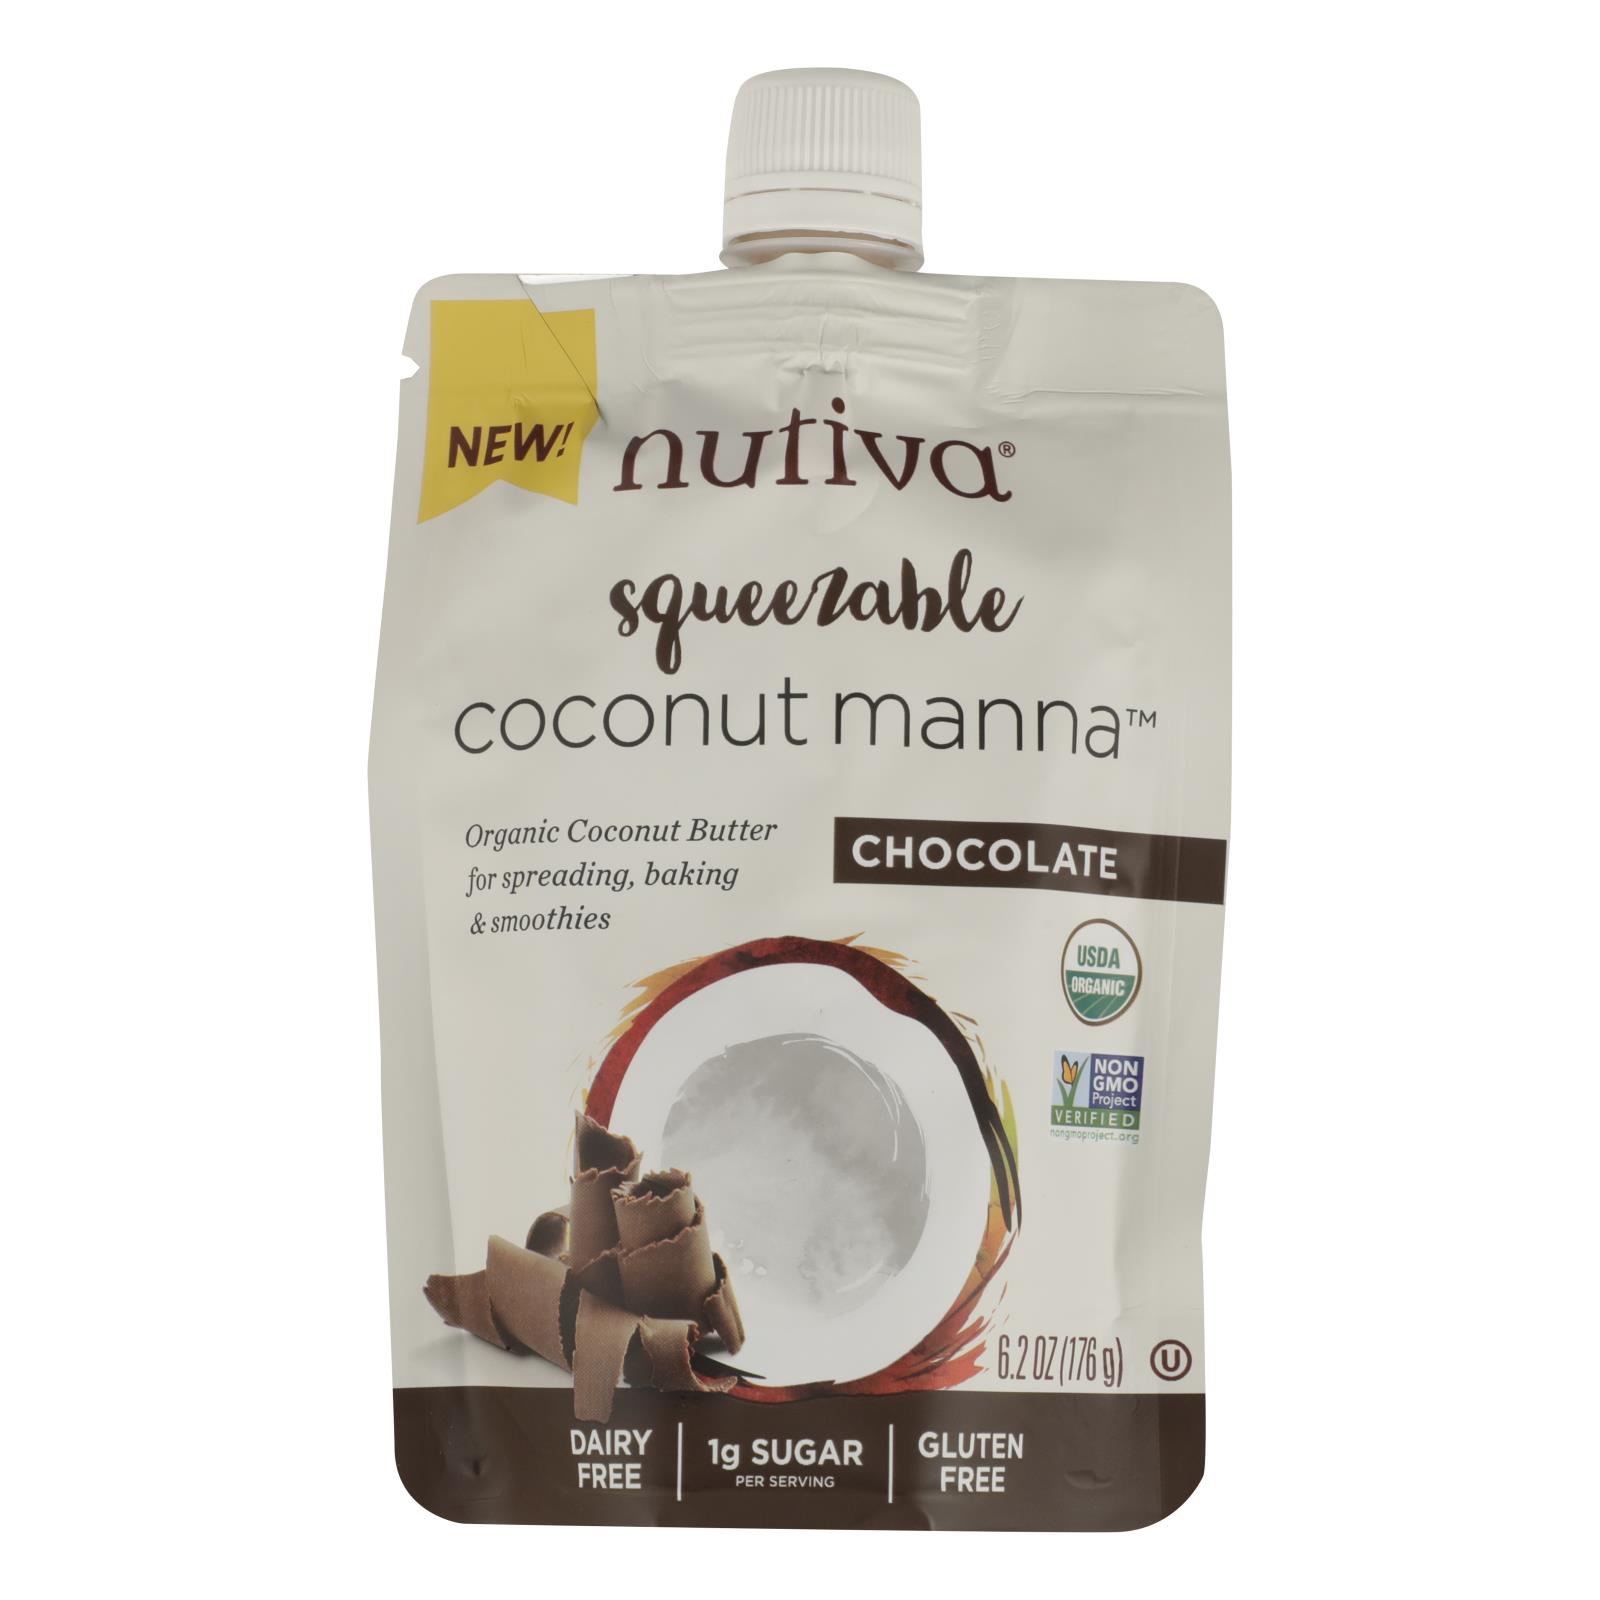 Nutiva - 짜 먹는 유기농 코코넛 만나, 초콜릿, 176g - 6.2 OZ